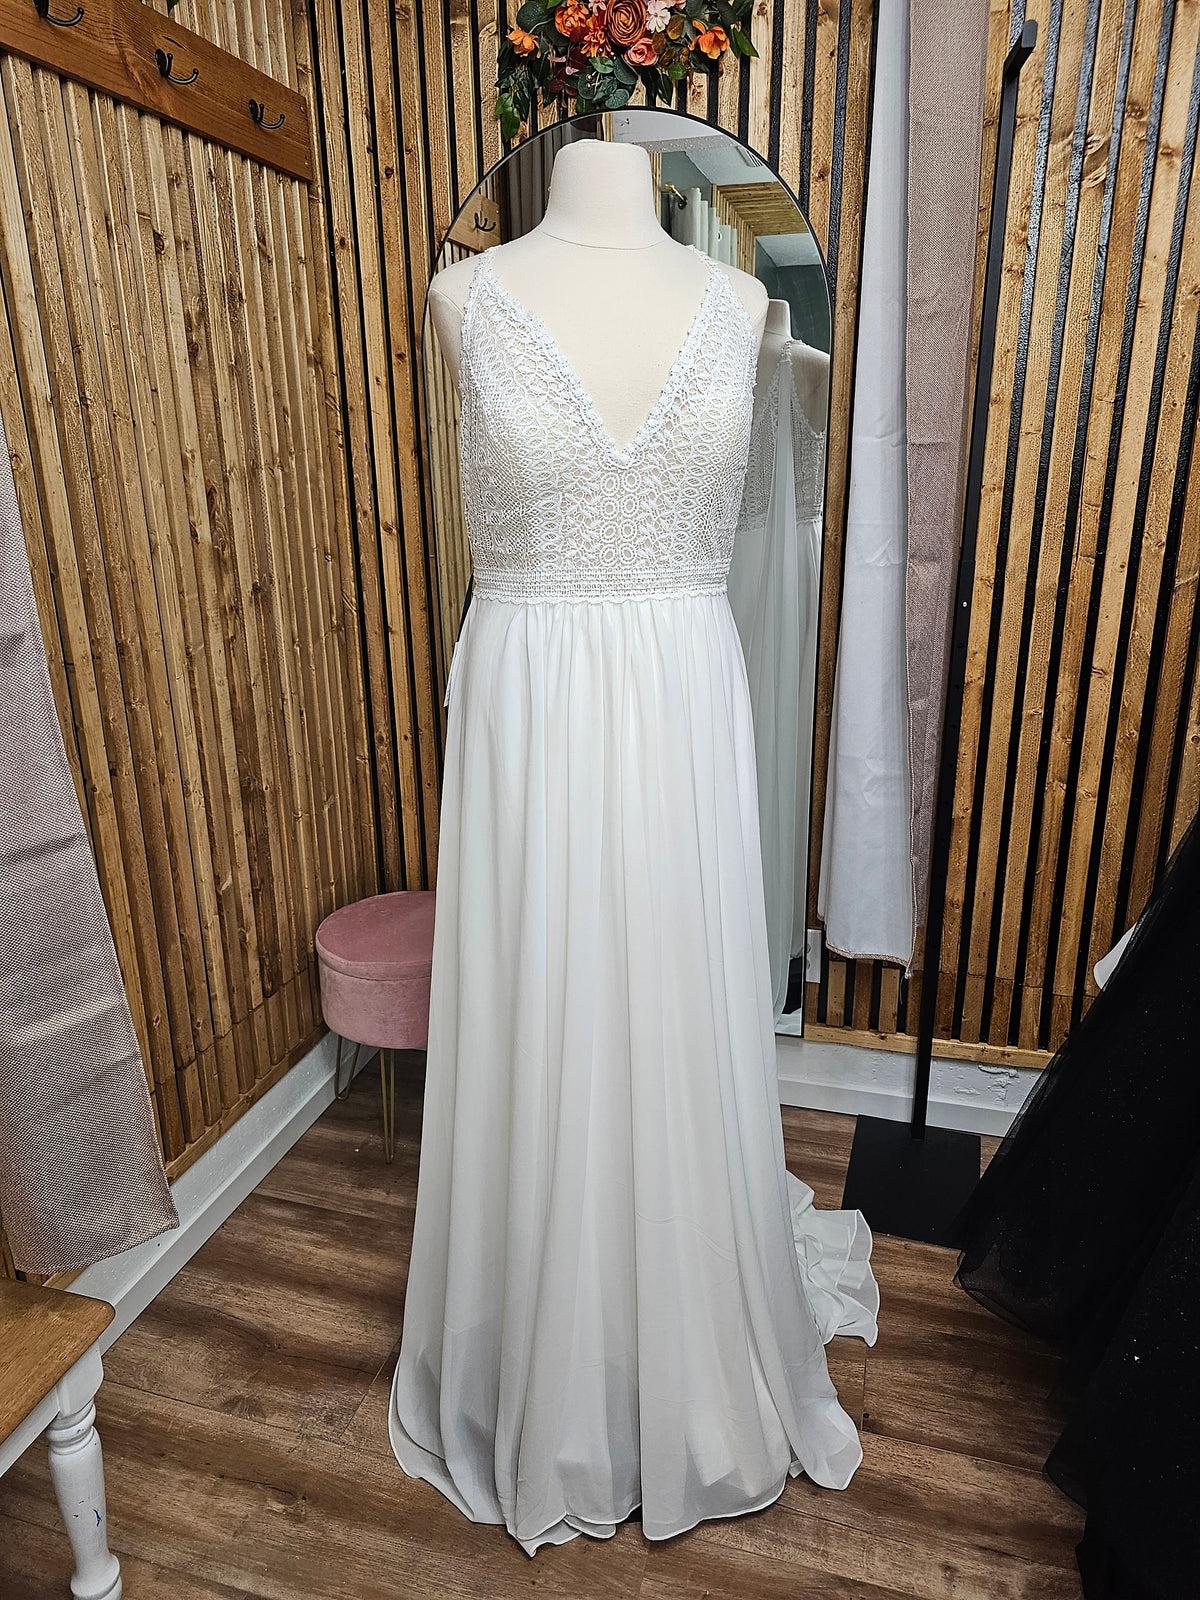 Boho Style ALine Wedding Dress Bridal Gown V Neckline Detachable Shoulder Cape Veil Chiffon Skirt Sleeveless Size 18 Ready to Ship